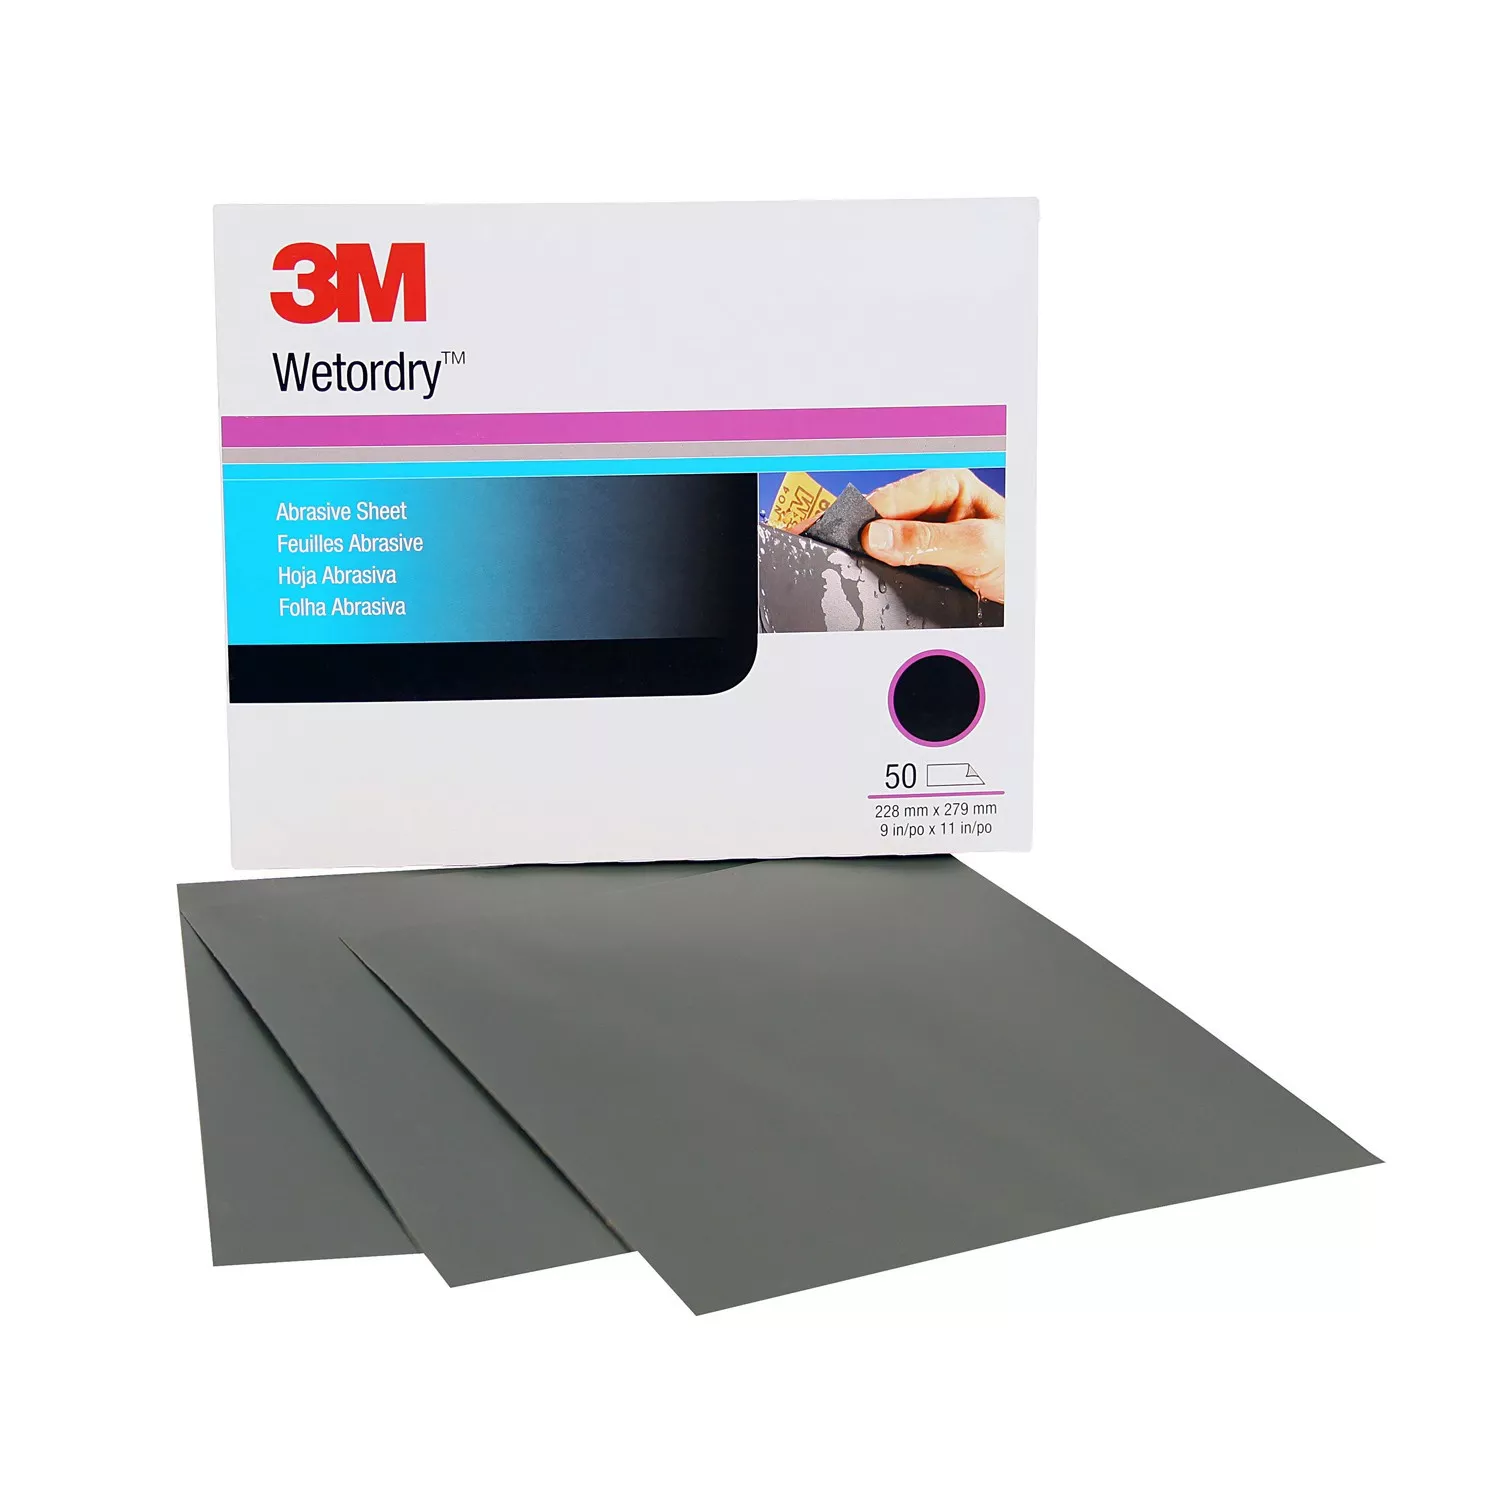 3M™ Wetordry™ Abrasive Sheet, 02042, P240, 9 in x 11 in, 50 sheets per
carton, 5 cartons per case